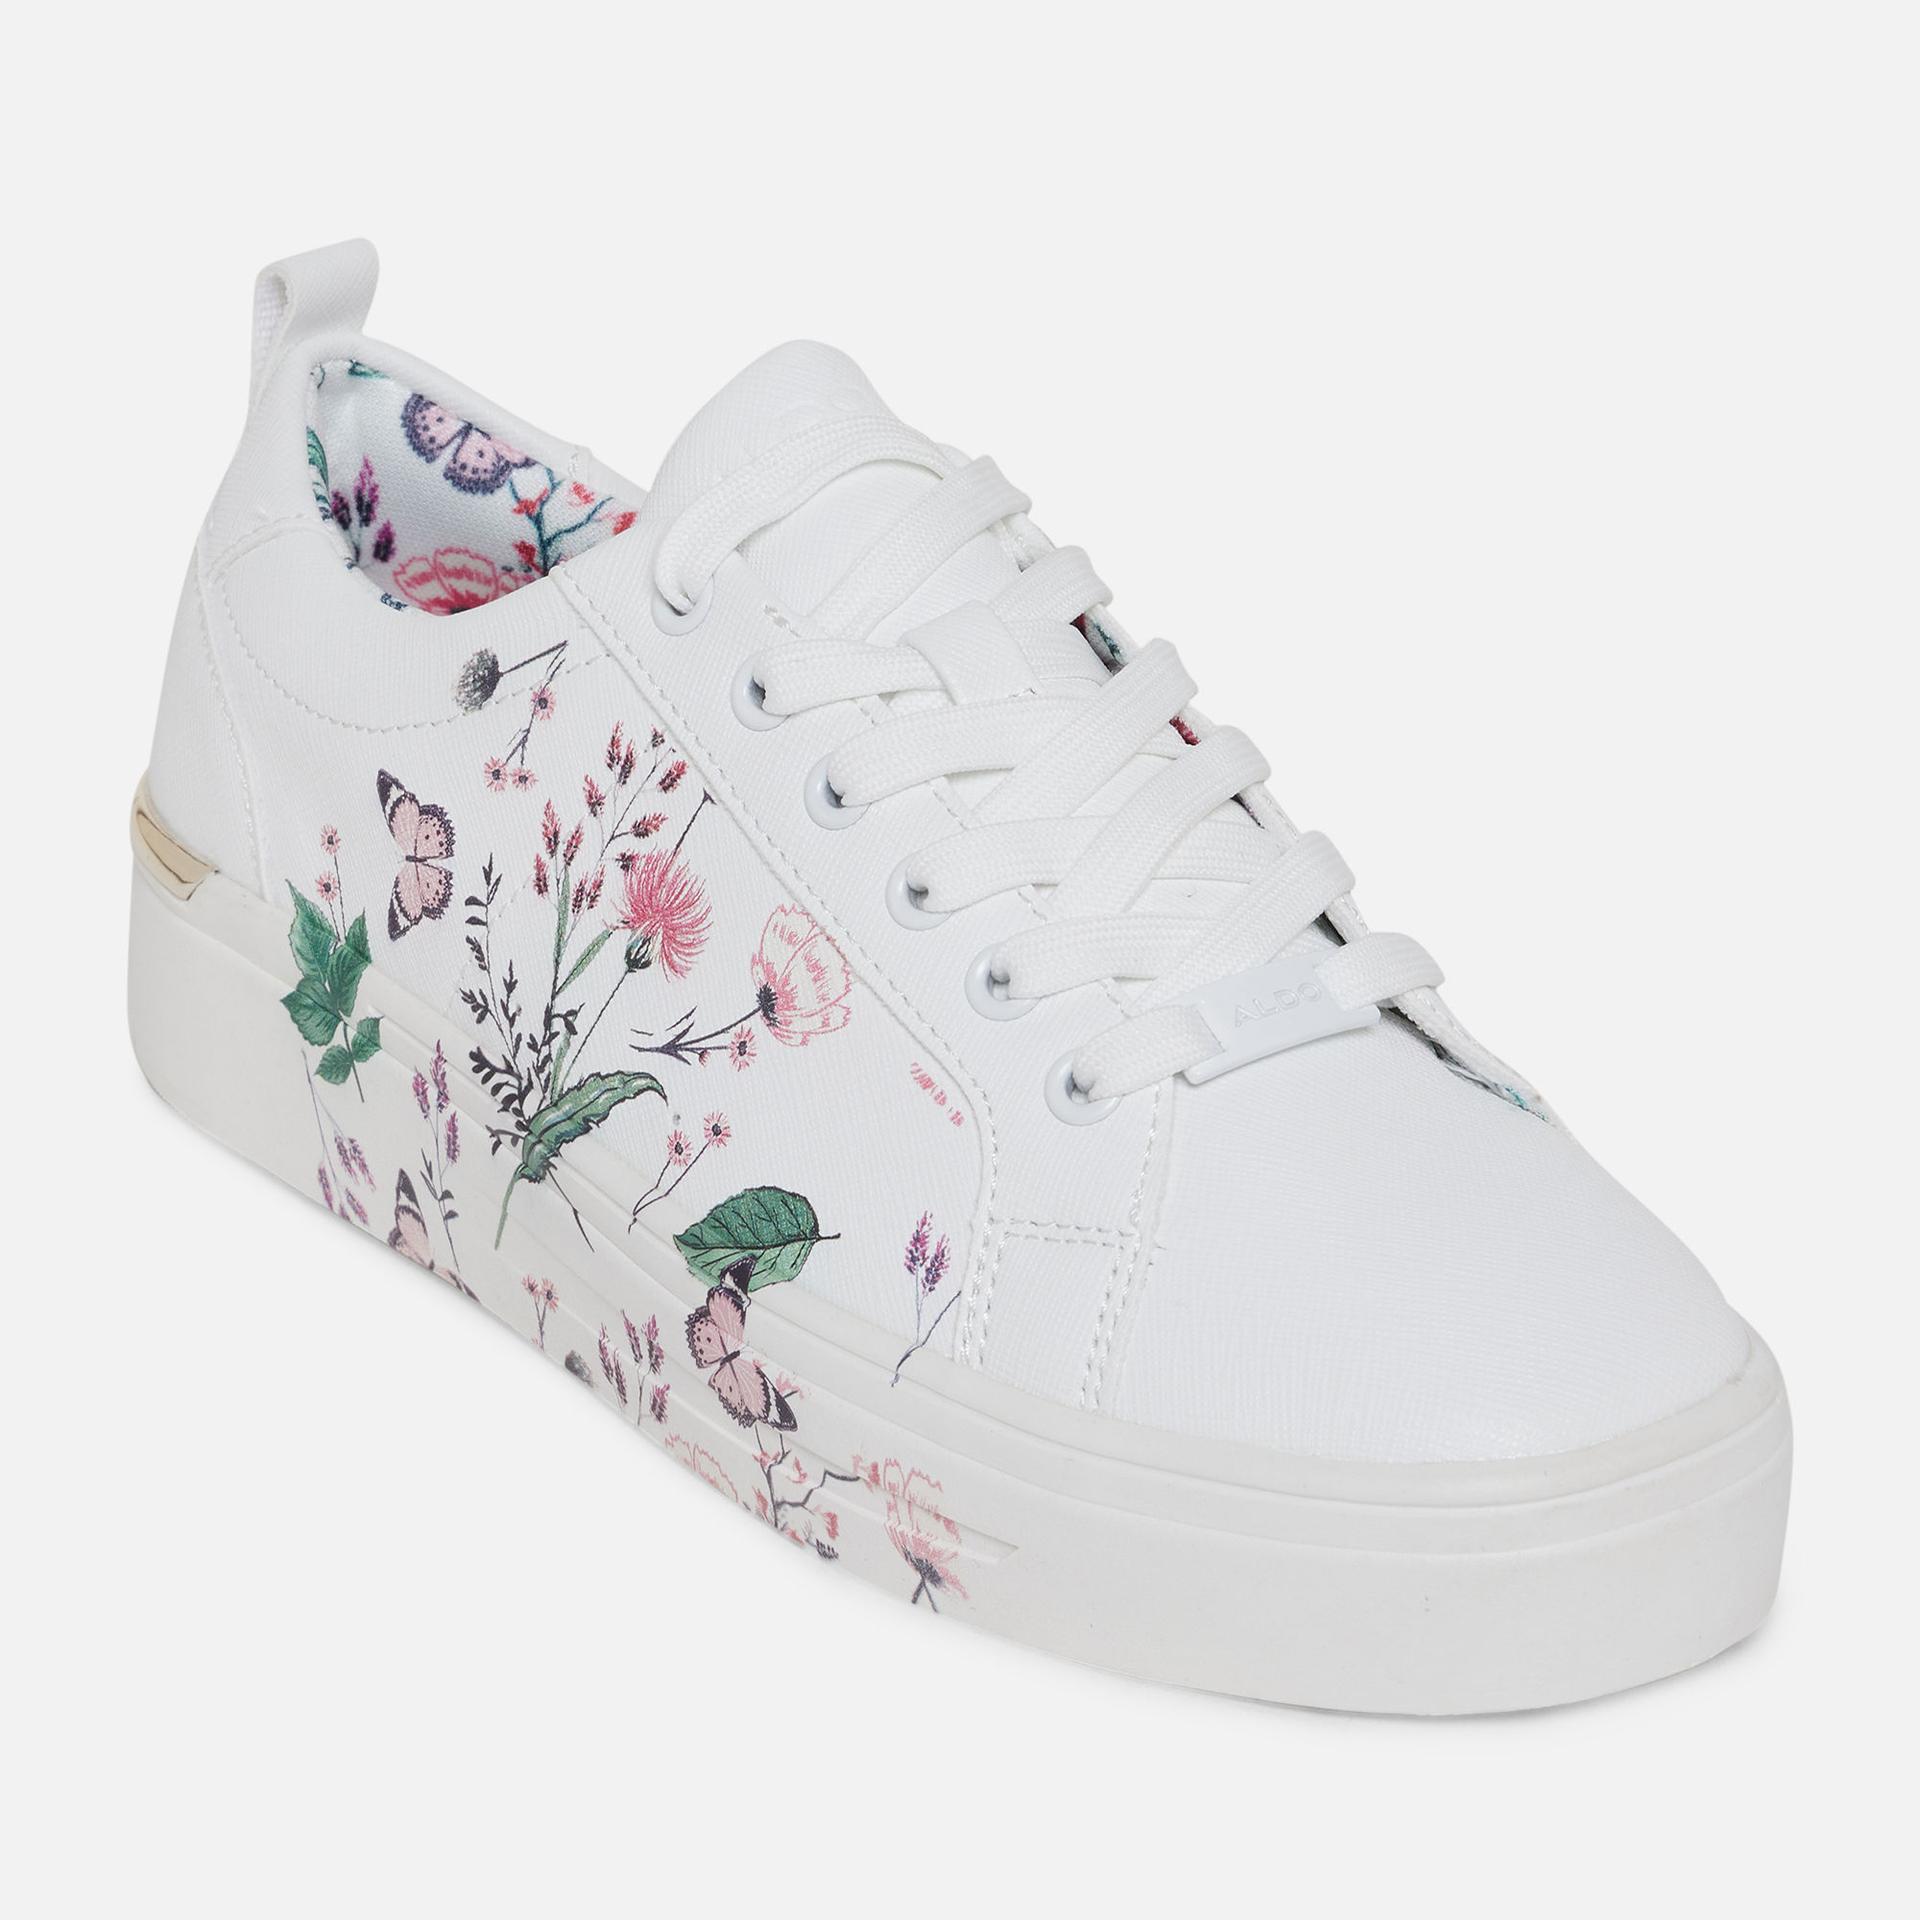 meadow printed white sneakers